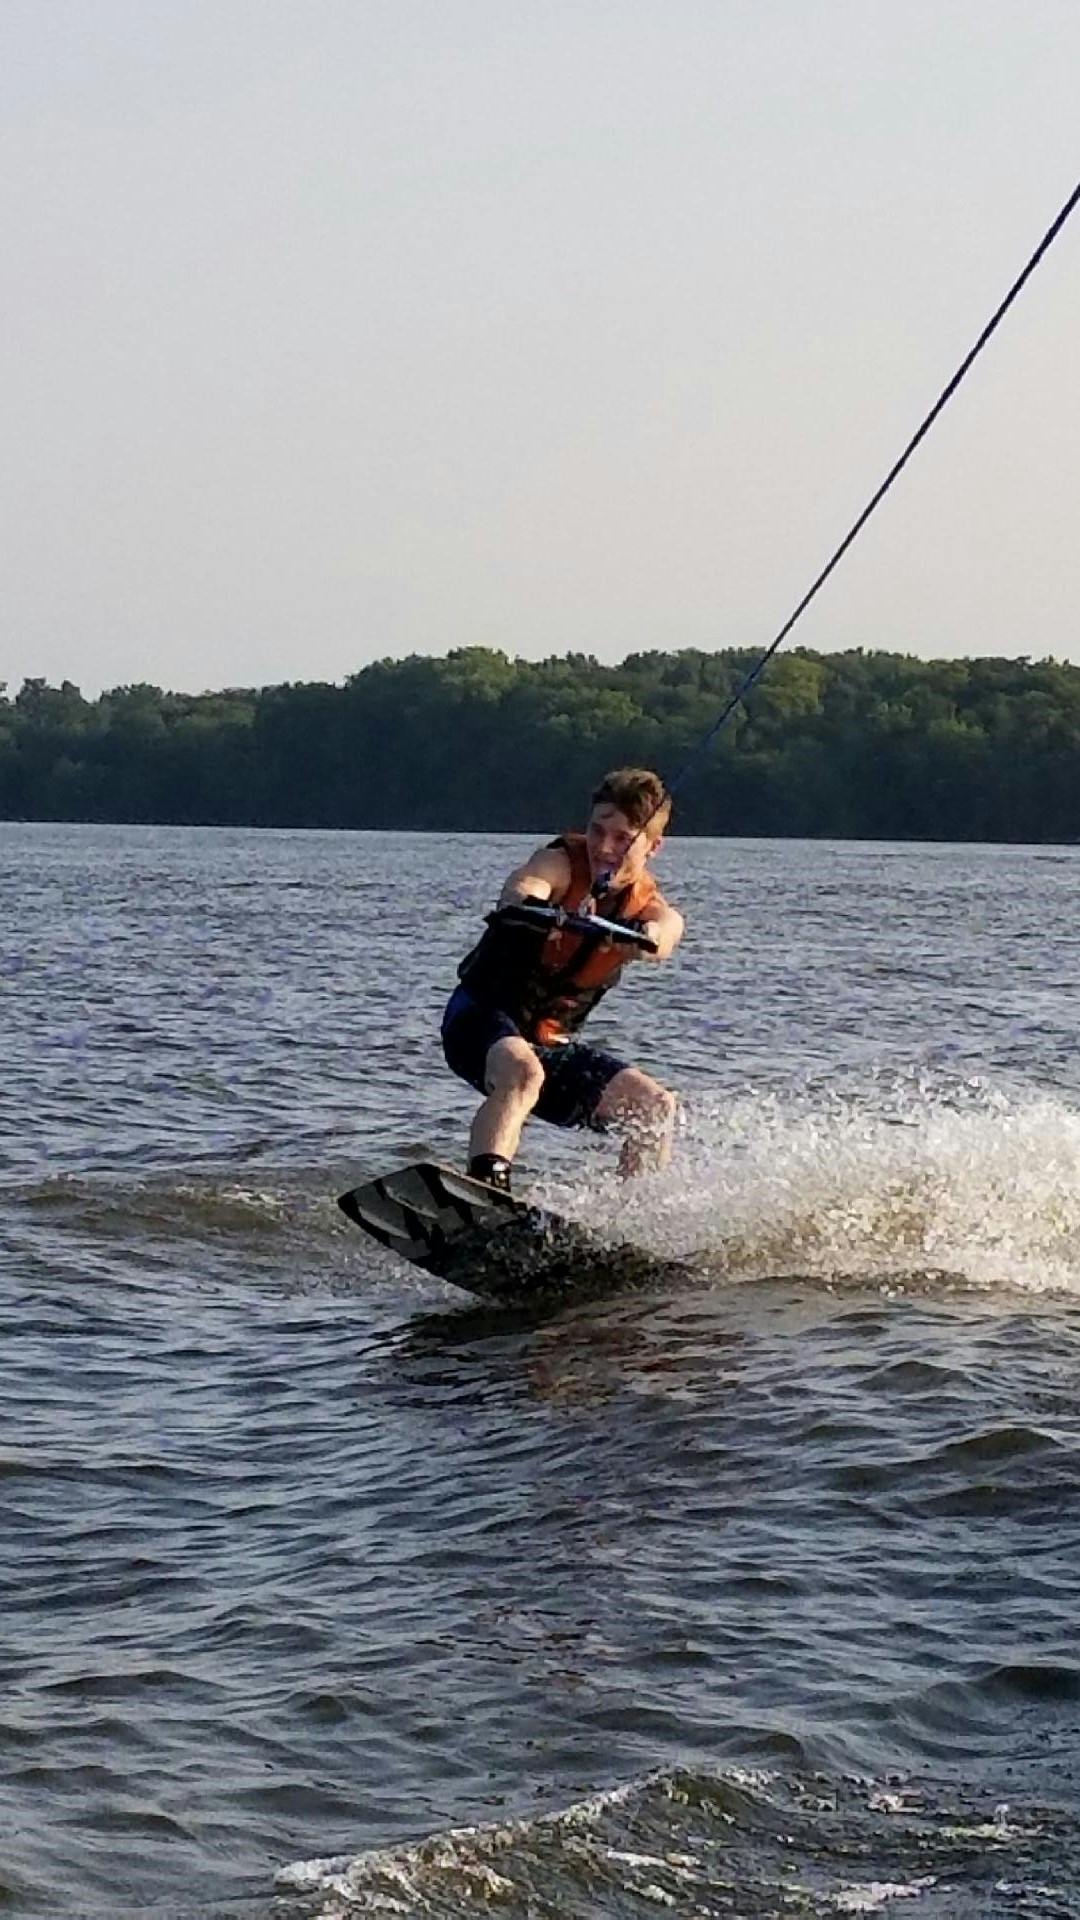 Image of Jordan Ready Wakeboarding on a lake